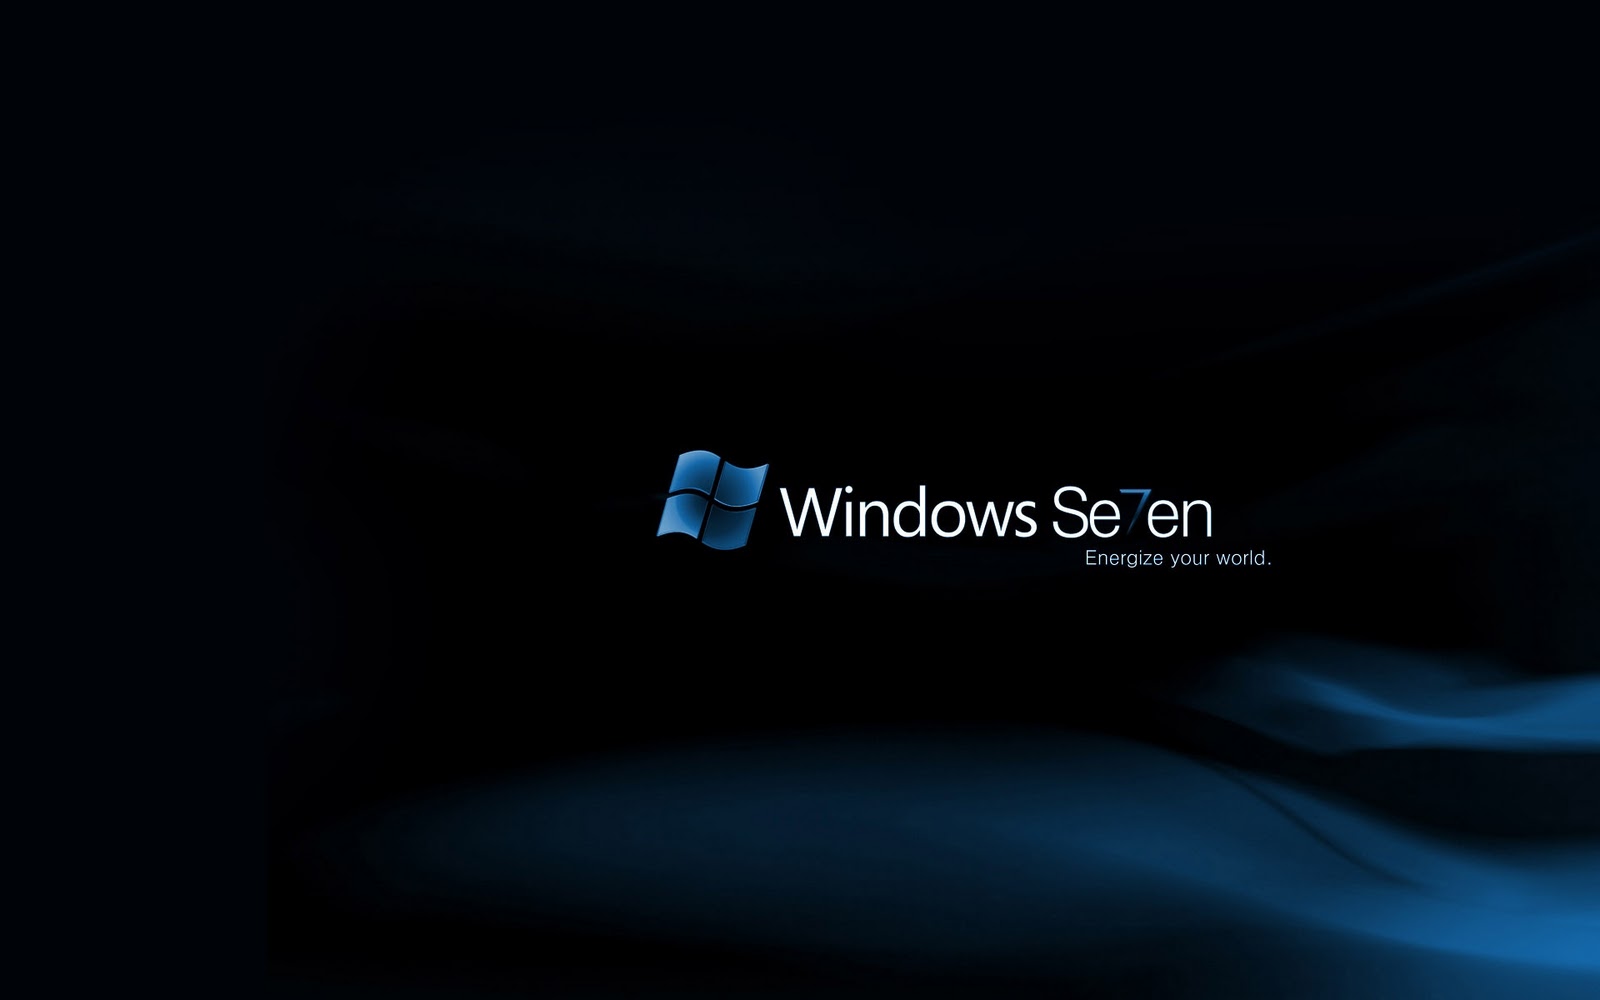 http://2.bp.blogspot.com/_RAlP3BmEW1Q/TQNn2ZjascI/AAAAAAAABUw/tTO3dvDkdx4/s1600/Windows-7-achtergronden-windows-7-wallpapers-5.jpg